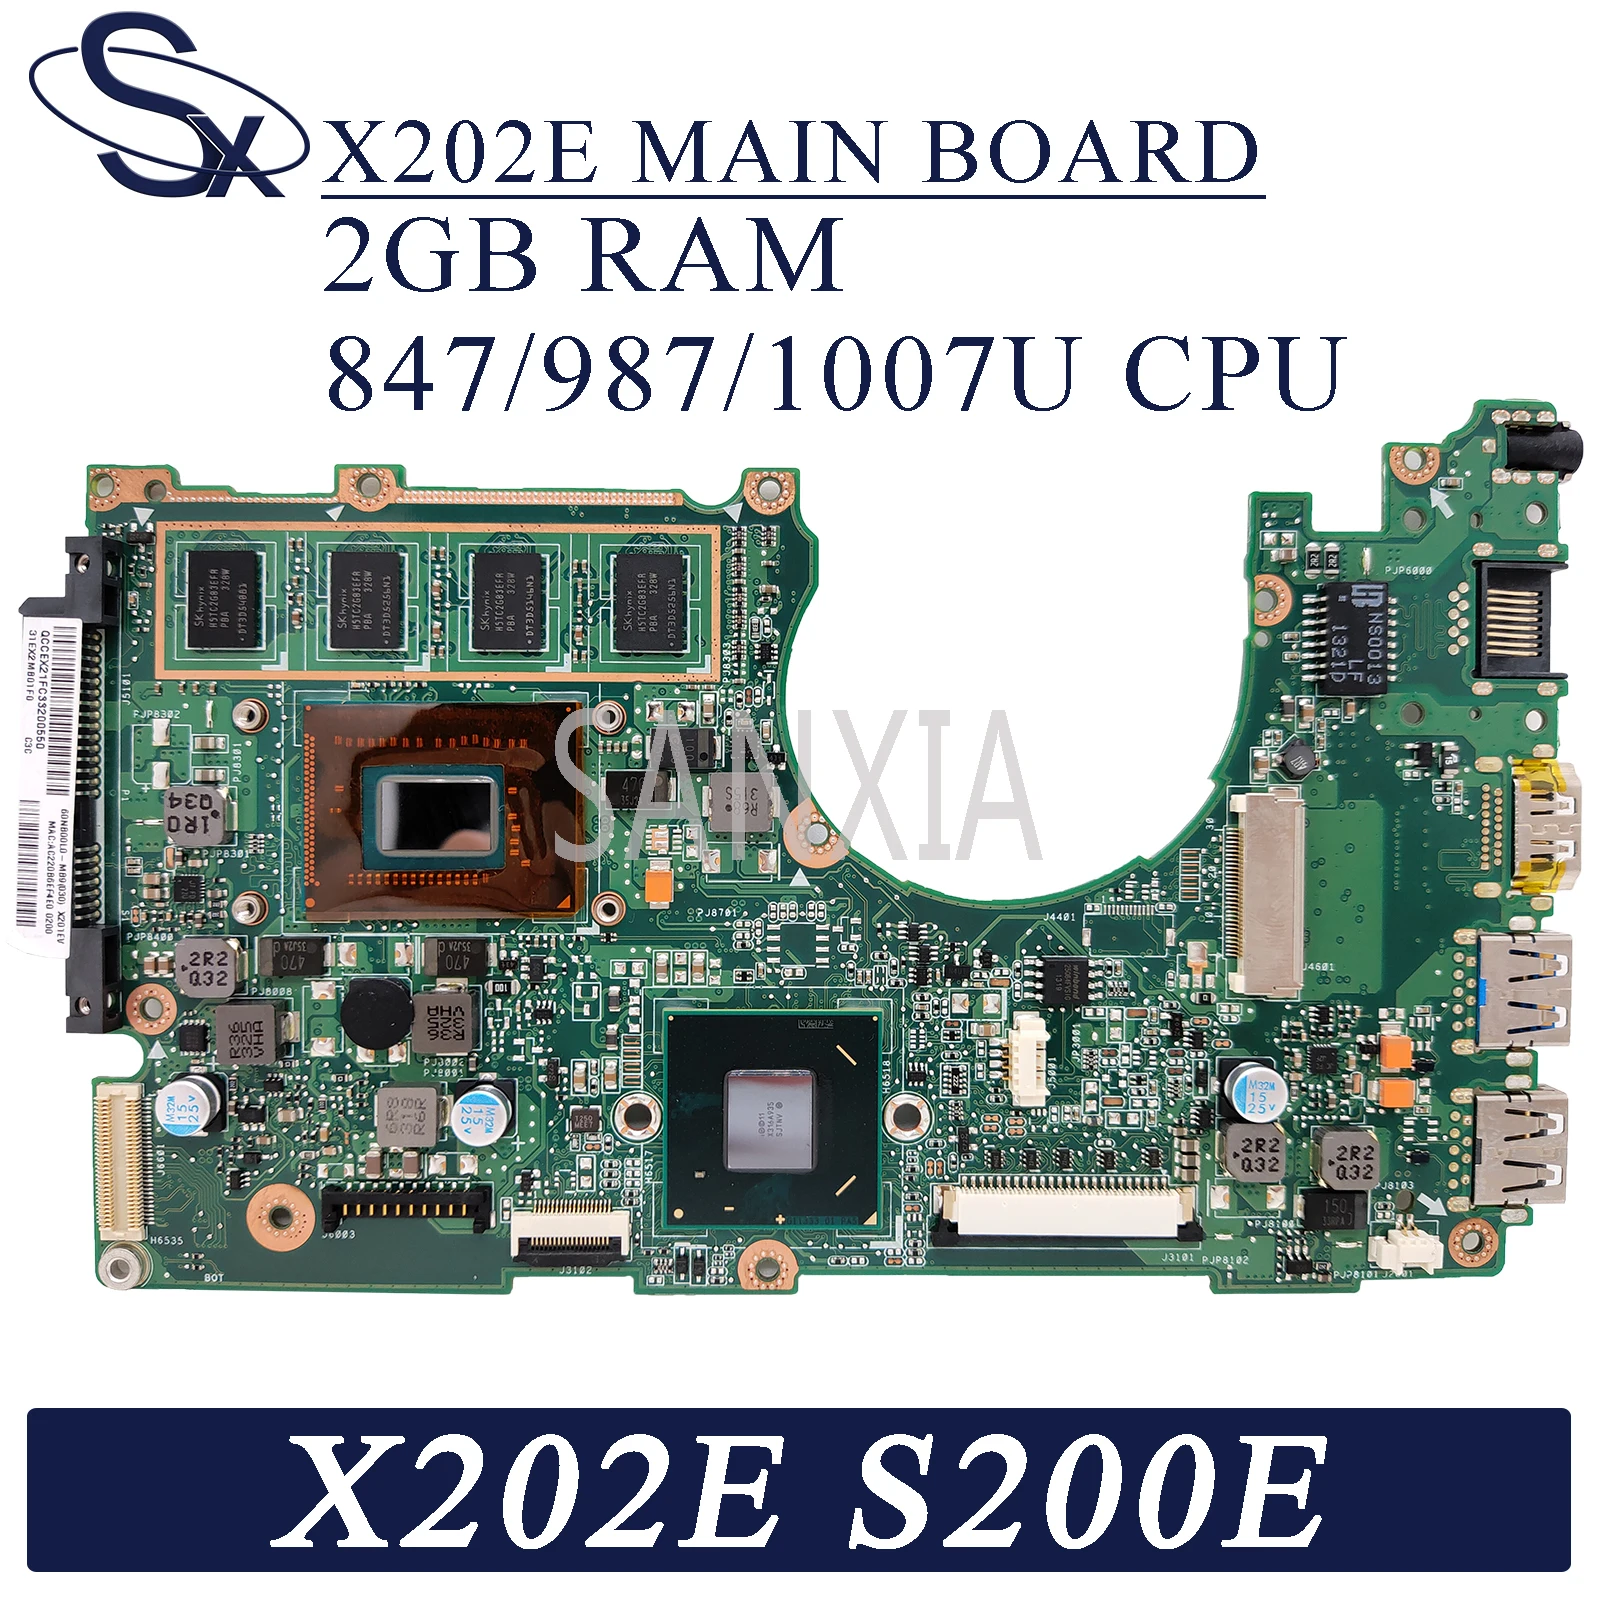 

KEFU X202E Laptop motherboard for ASUS VivoBook S200E X201E X201EP X201EV original mainboard 2GB-RAM 847/987/1007U CPU